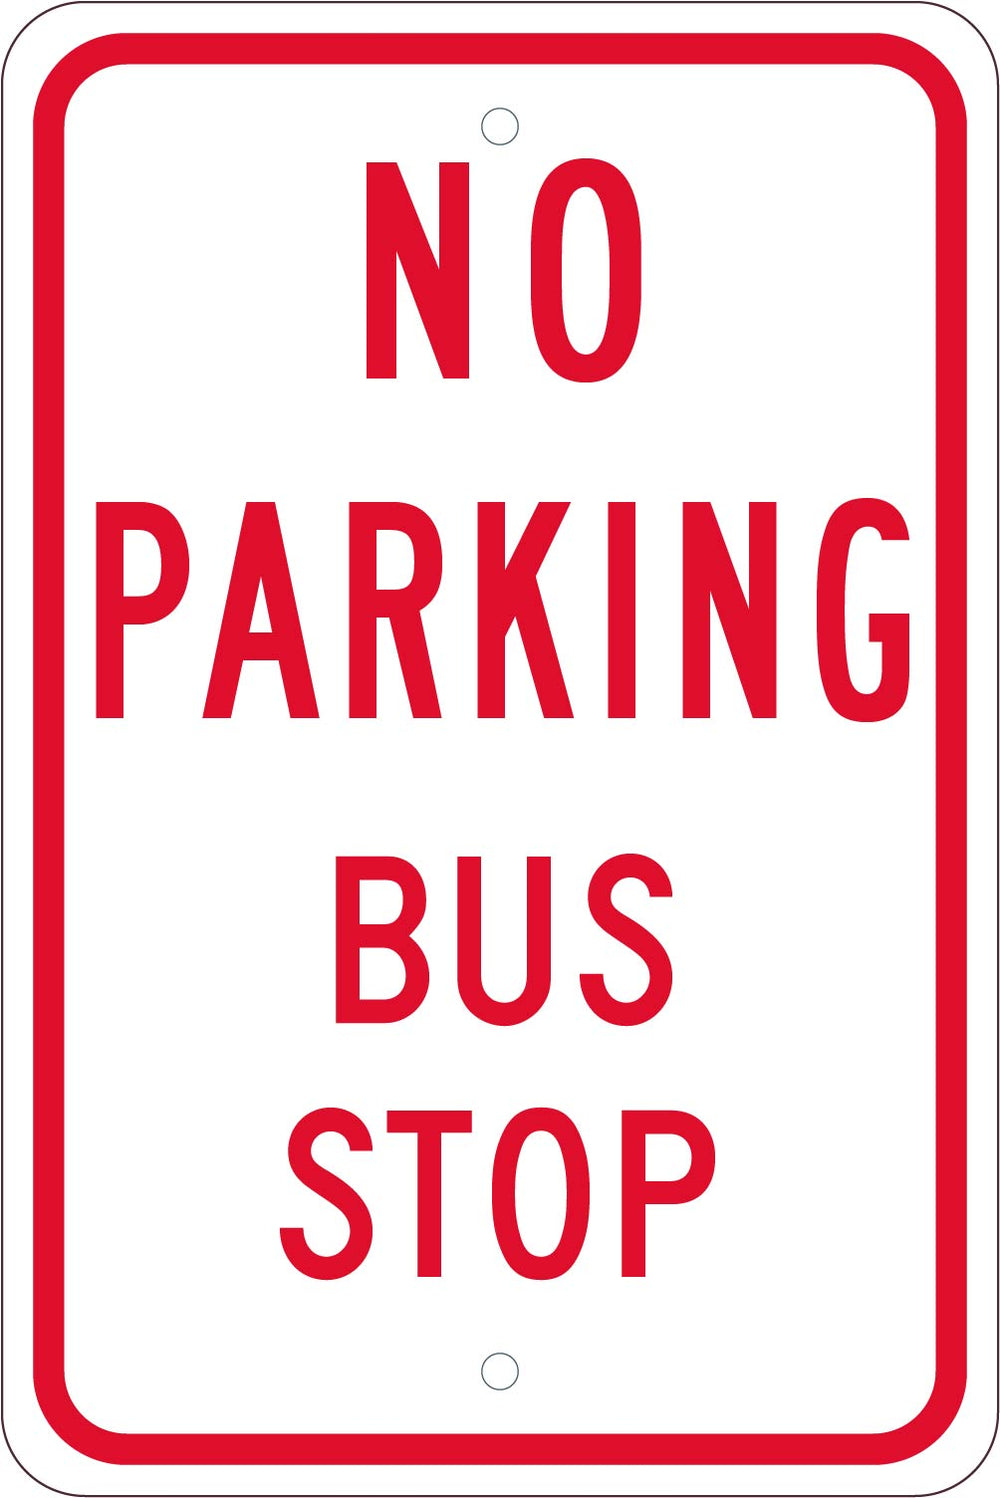 NO PARKING BUS STOP, 18X12, .080 EGP REF ALUM